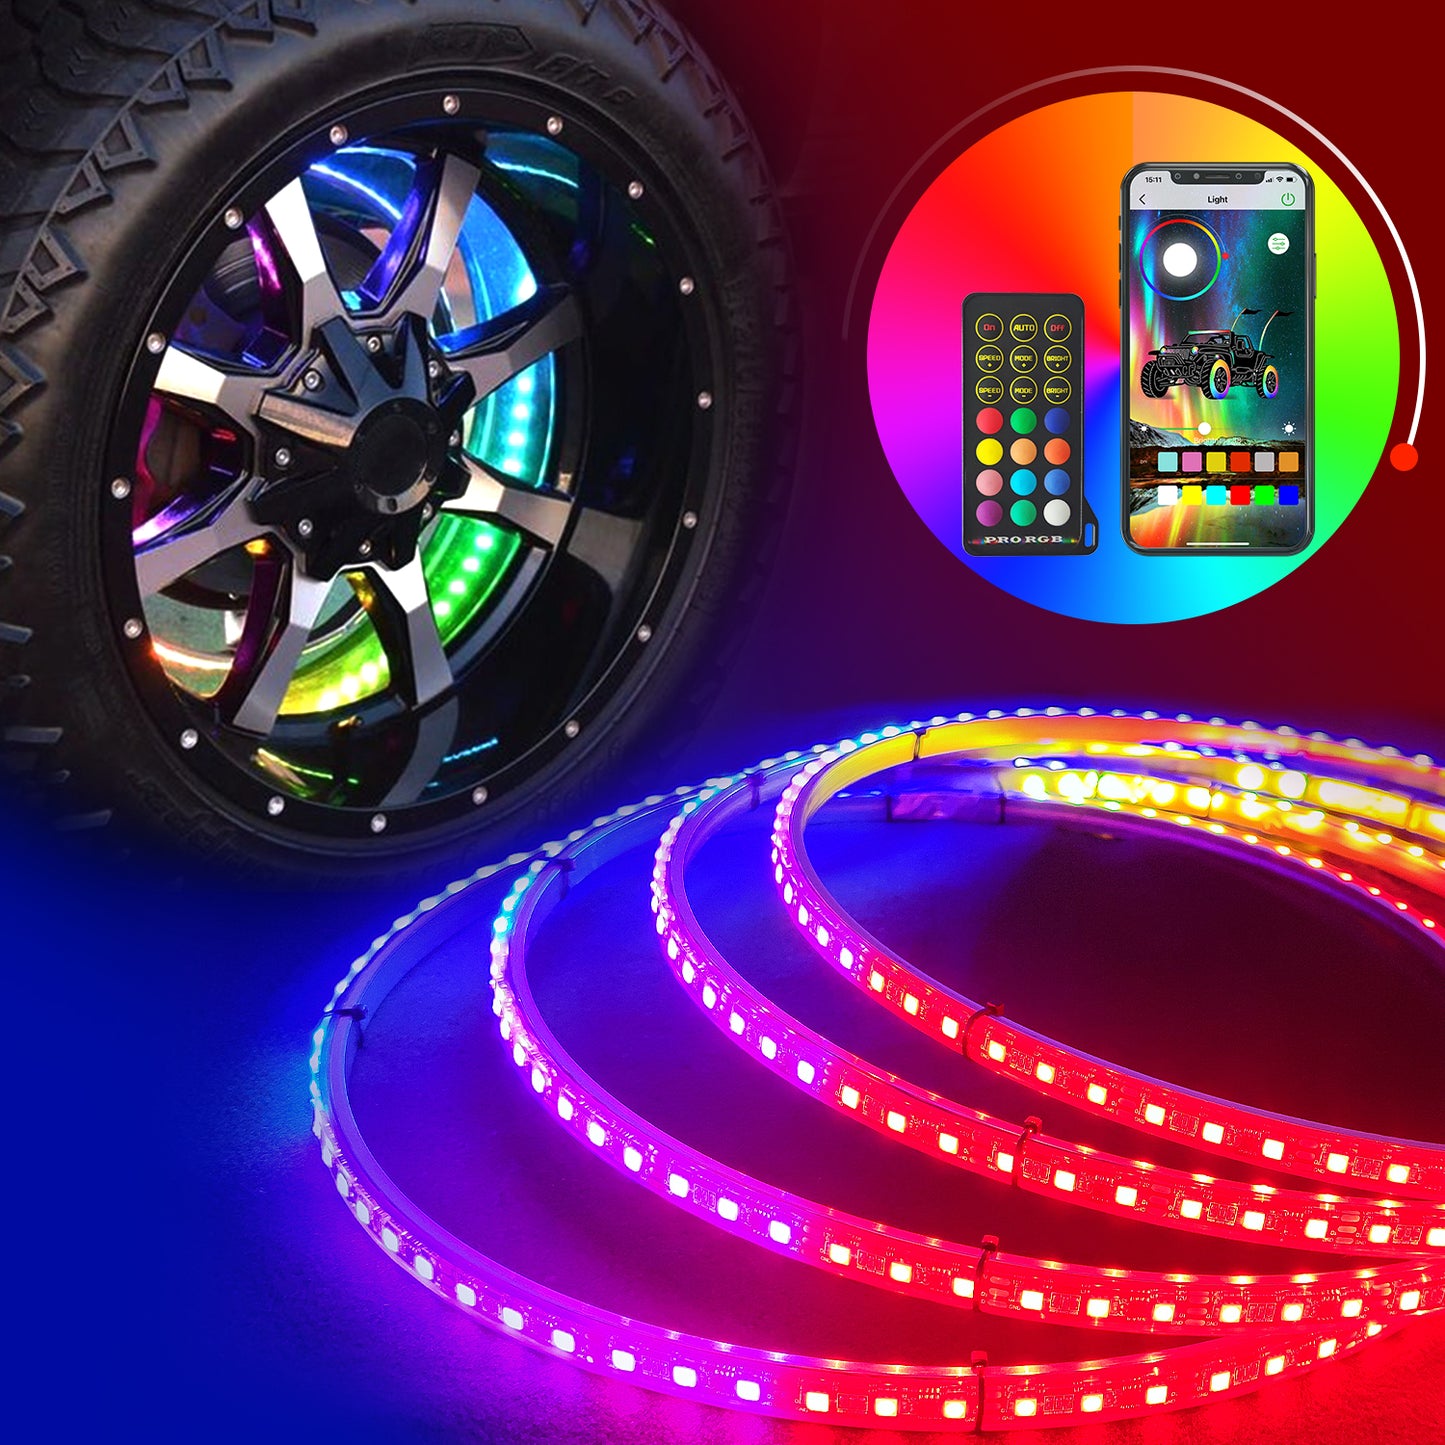 【EASY INSTALL】4Pcs 15.5 inch Led Wheel Ring Lighting Kit Single Row Chase Dancing Color Neon Rim Light with W/Turn Signal & Braking